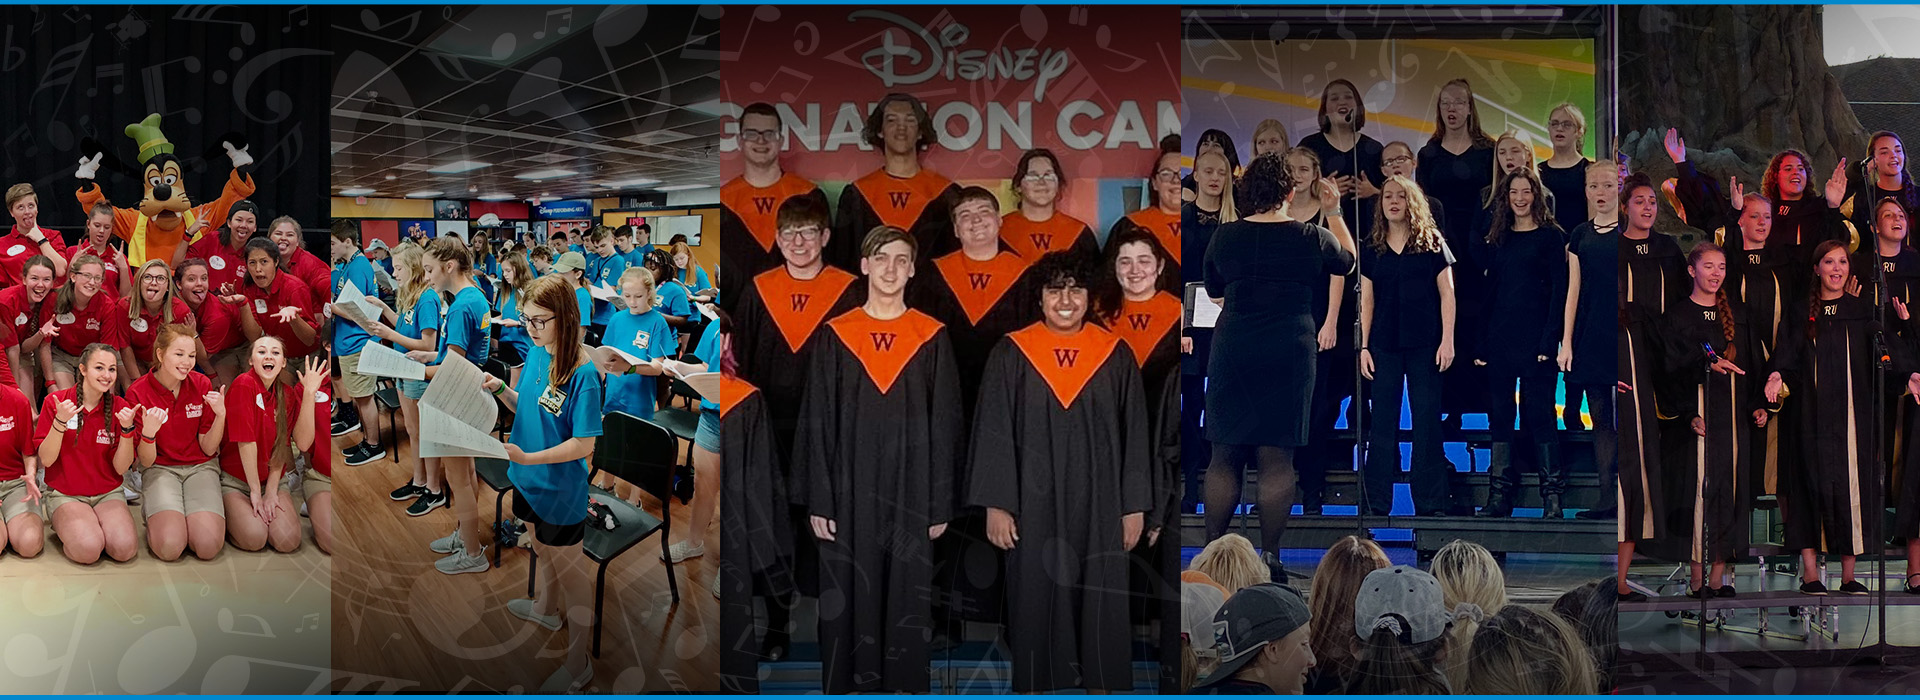 Disney Imagination Campus choir trips